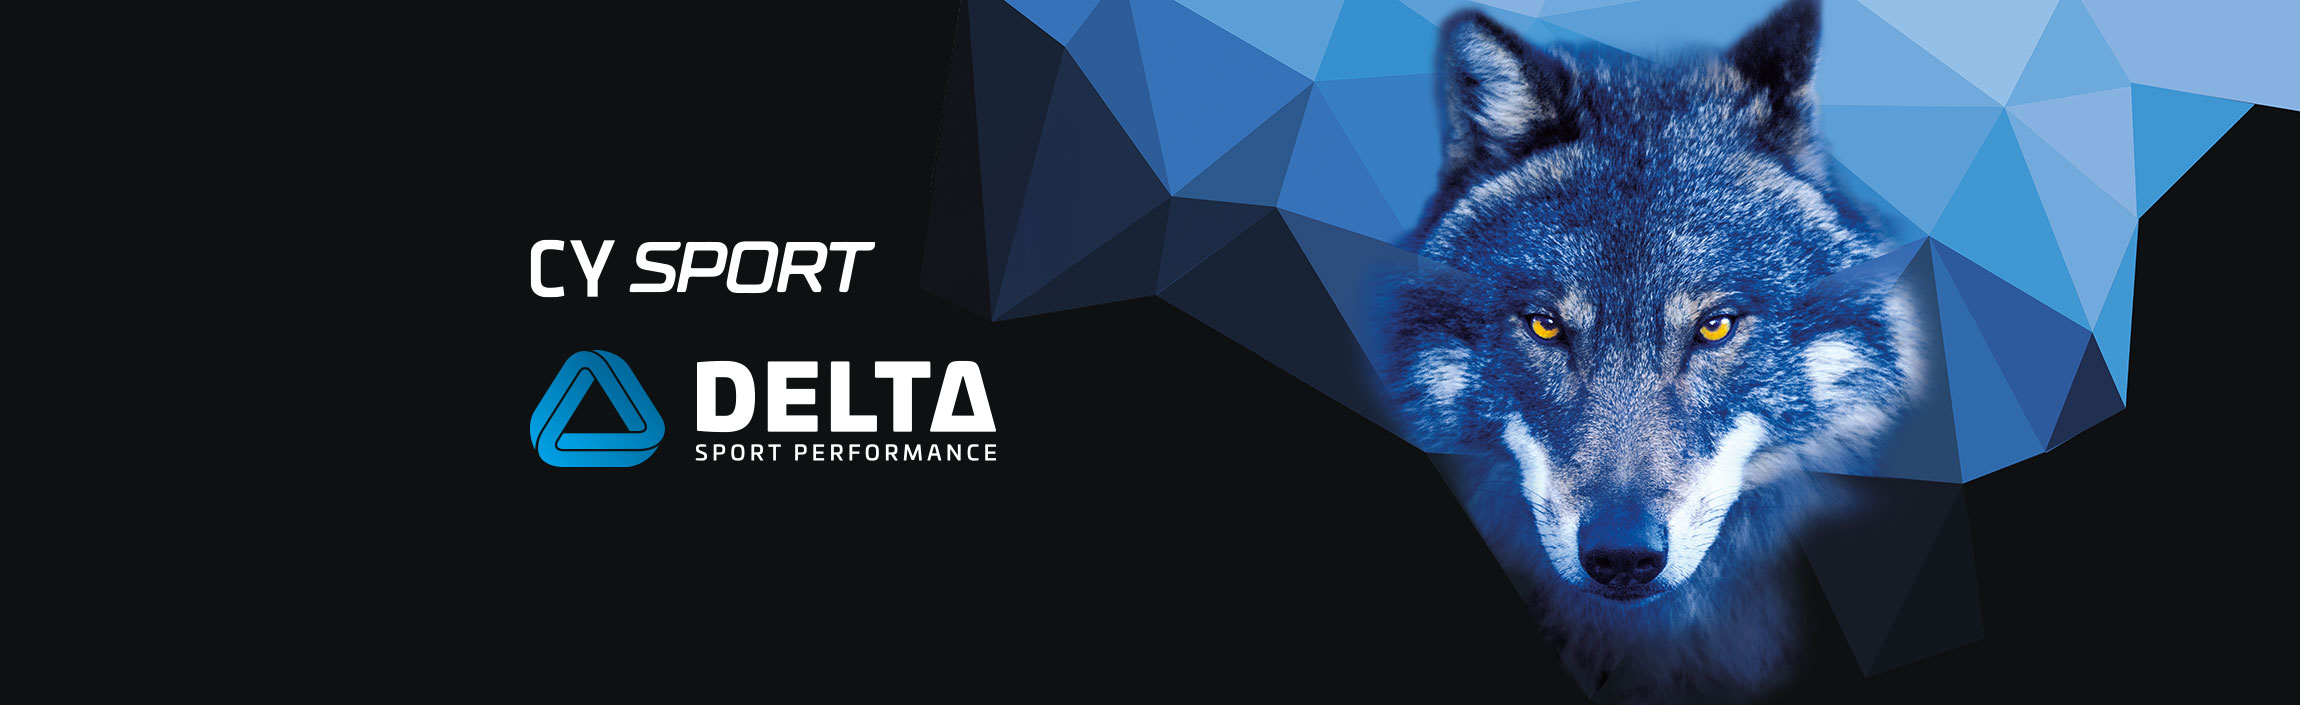 Lupo Delta Sport Performance